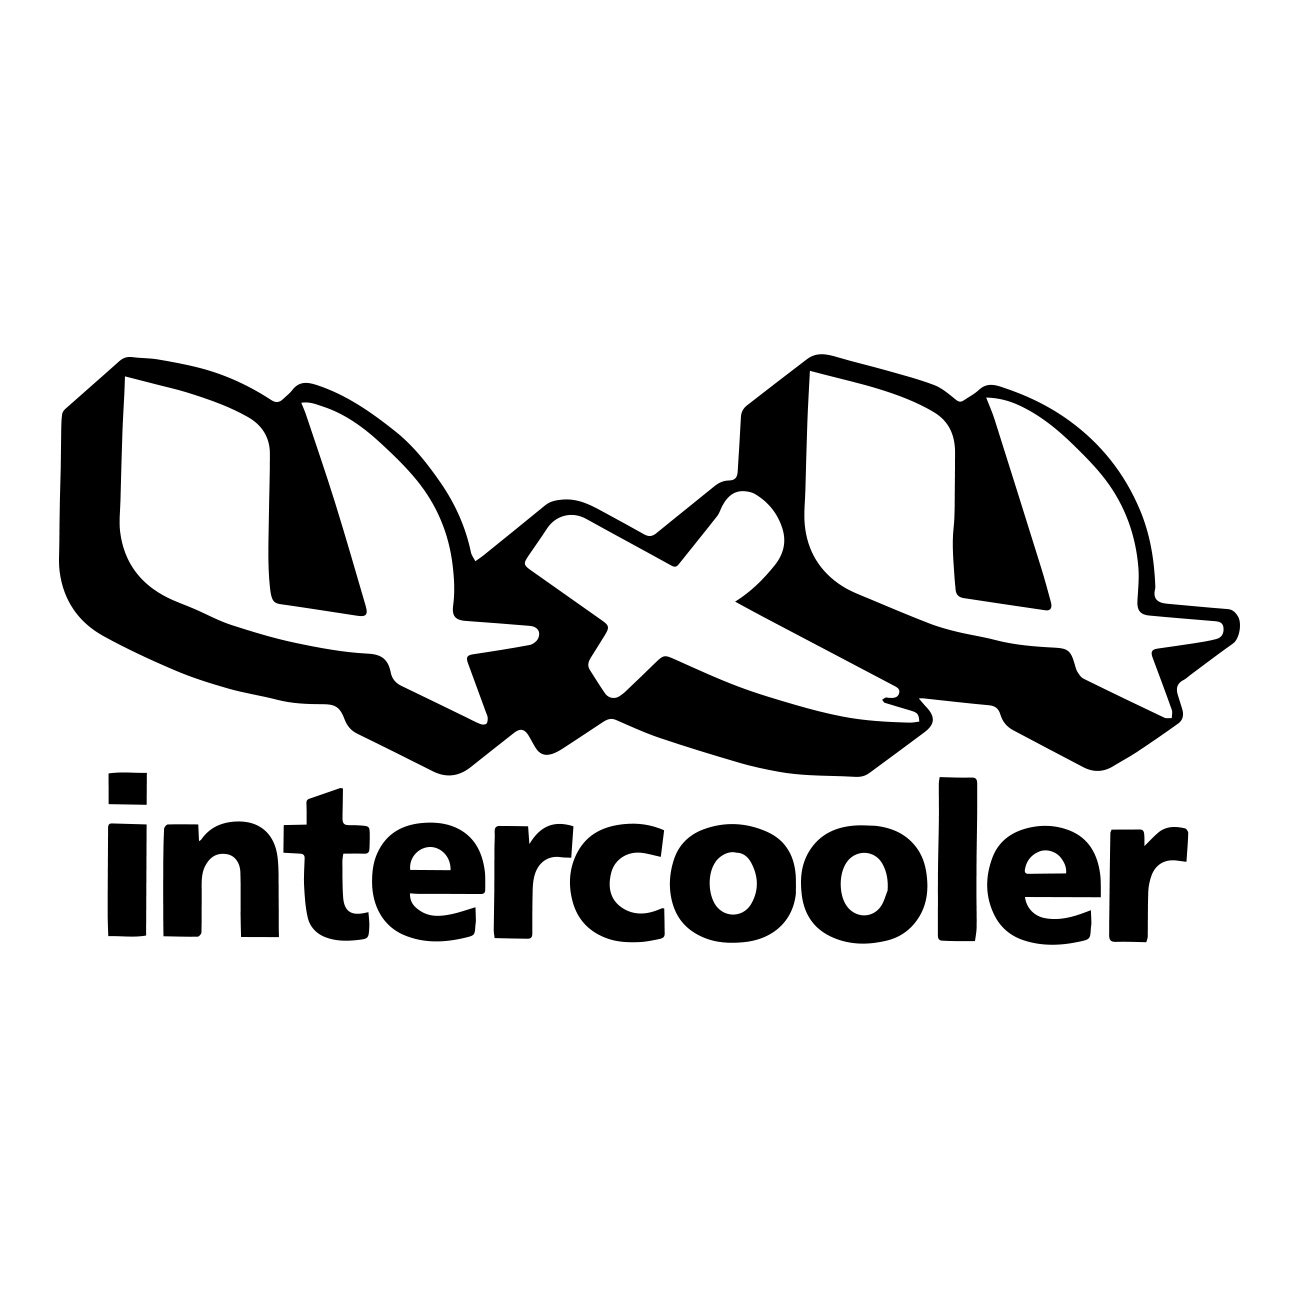 4x4 intercooler